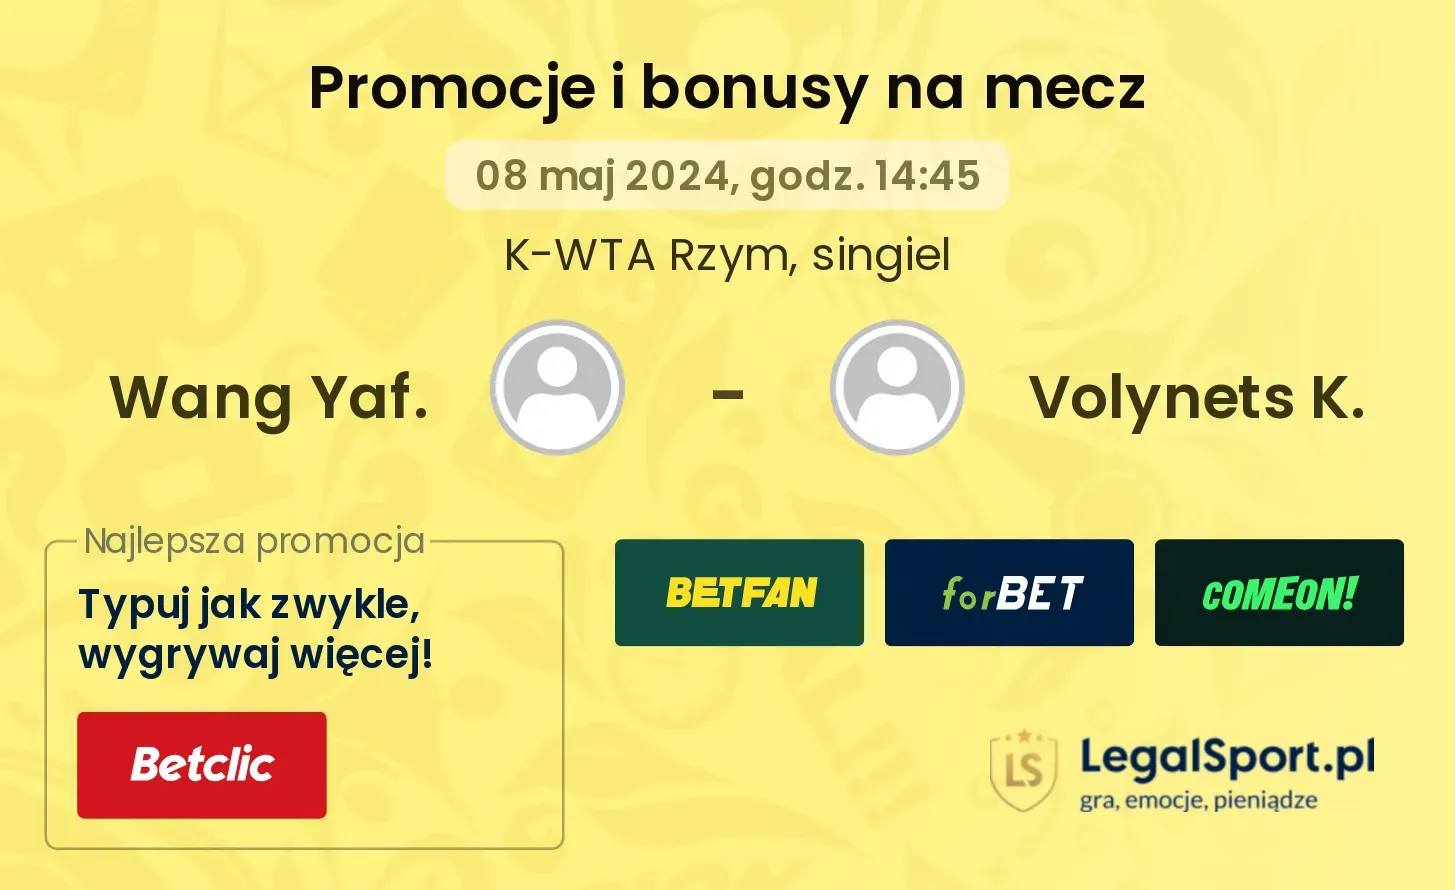 Wang Yaf. - Volynets K. promocje bonusy na mecz